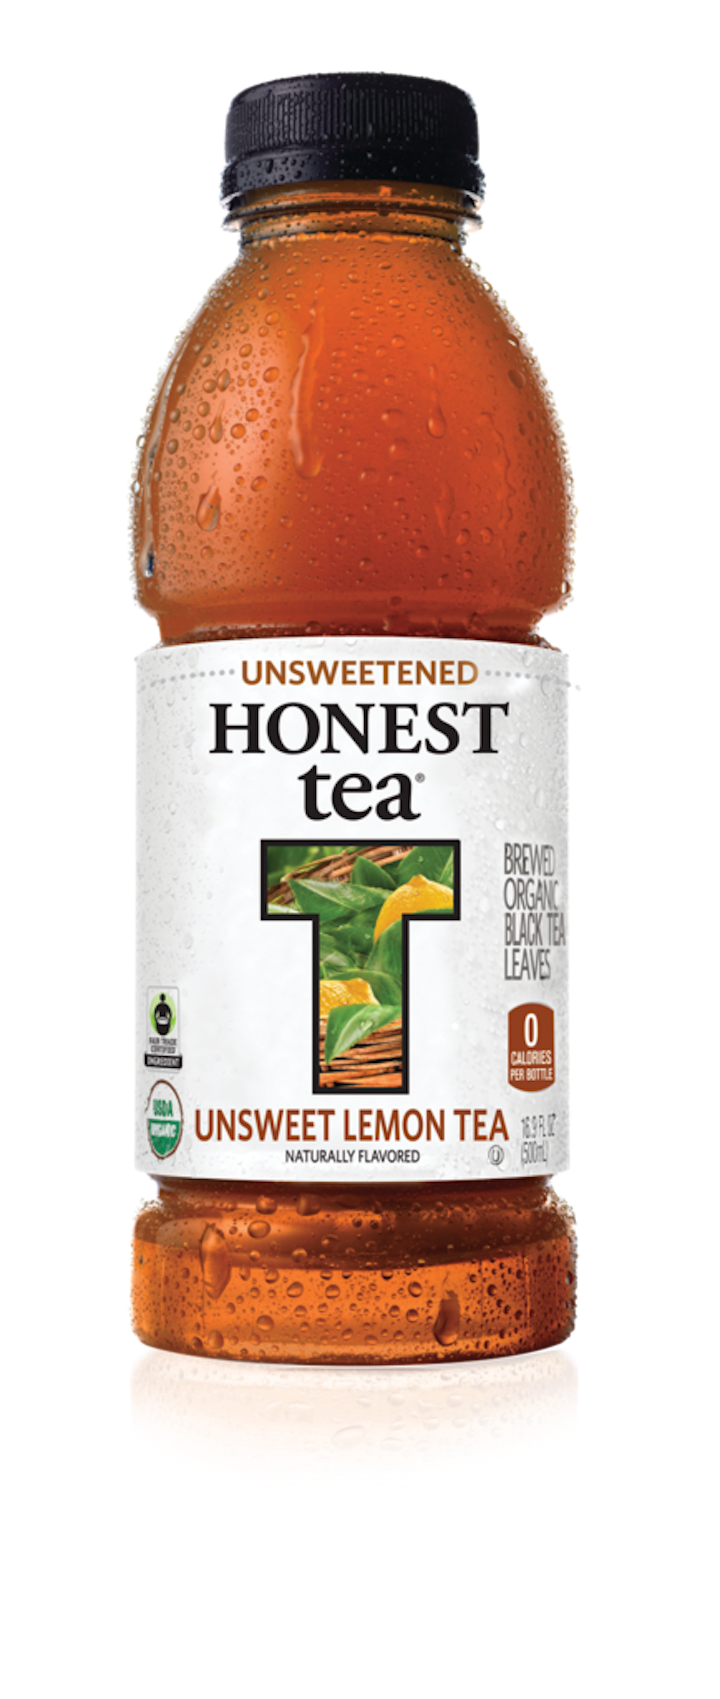 Honest Tea Places Honor System Beverage Kiosks Around The U S Vending Market Watch